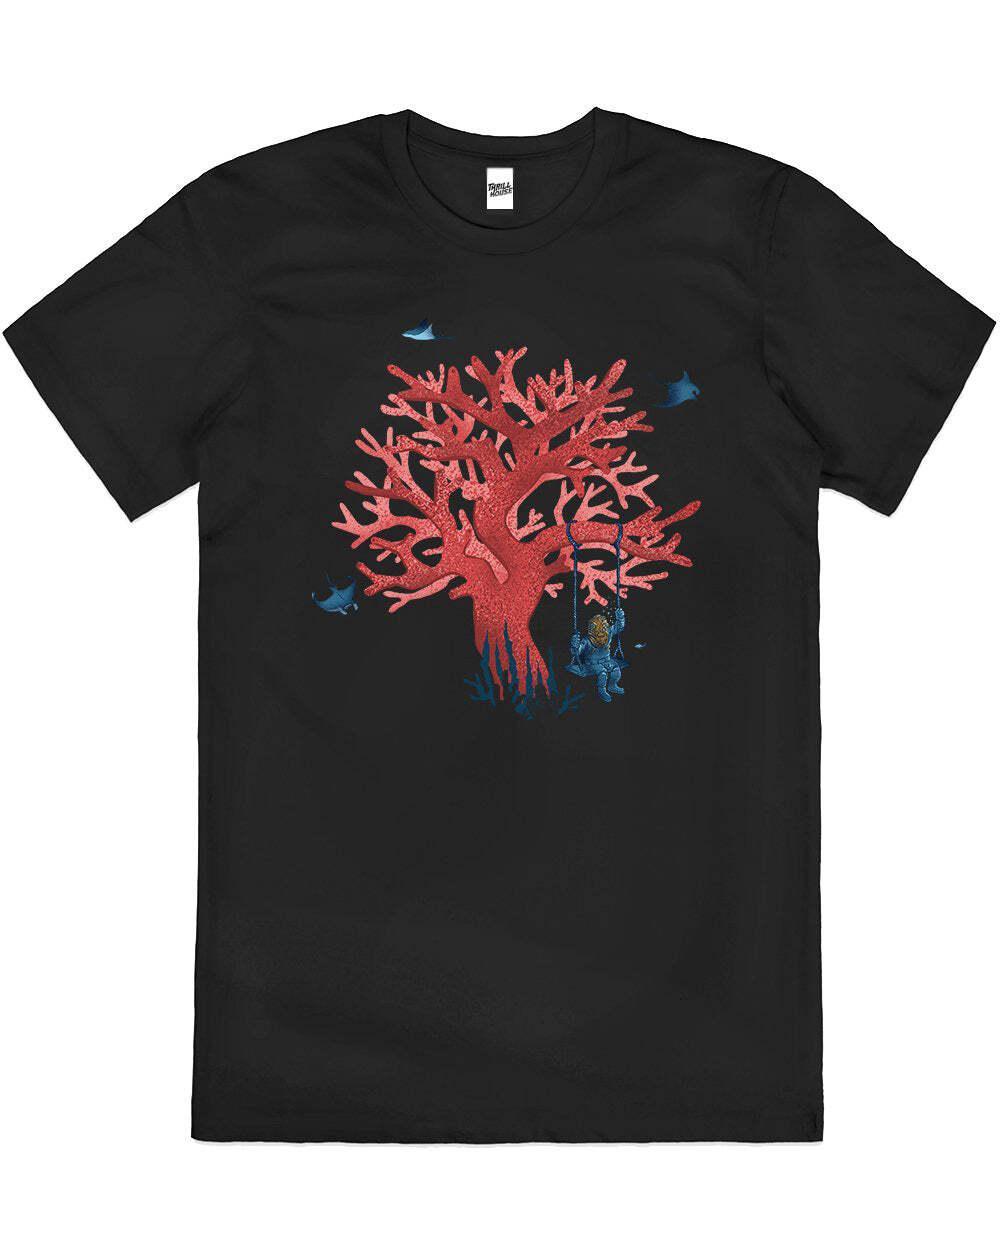 Coral Swing Nature Reef Ocean Diver Fish Cotton T-Shirt Unisex Tee Black